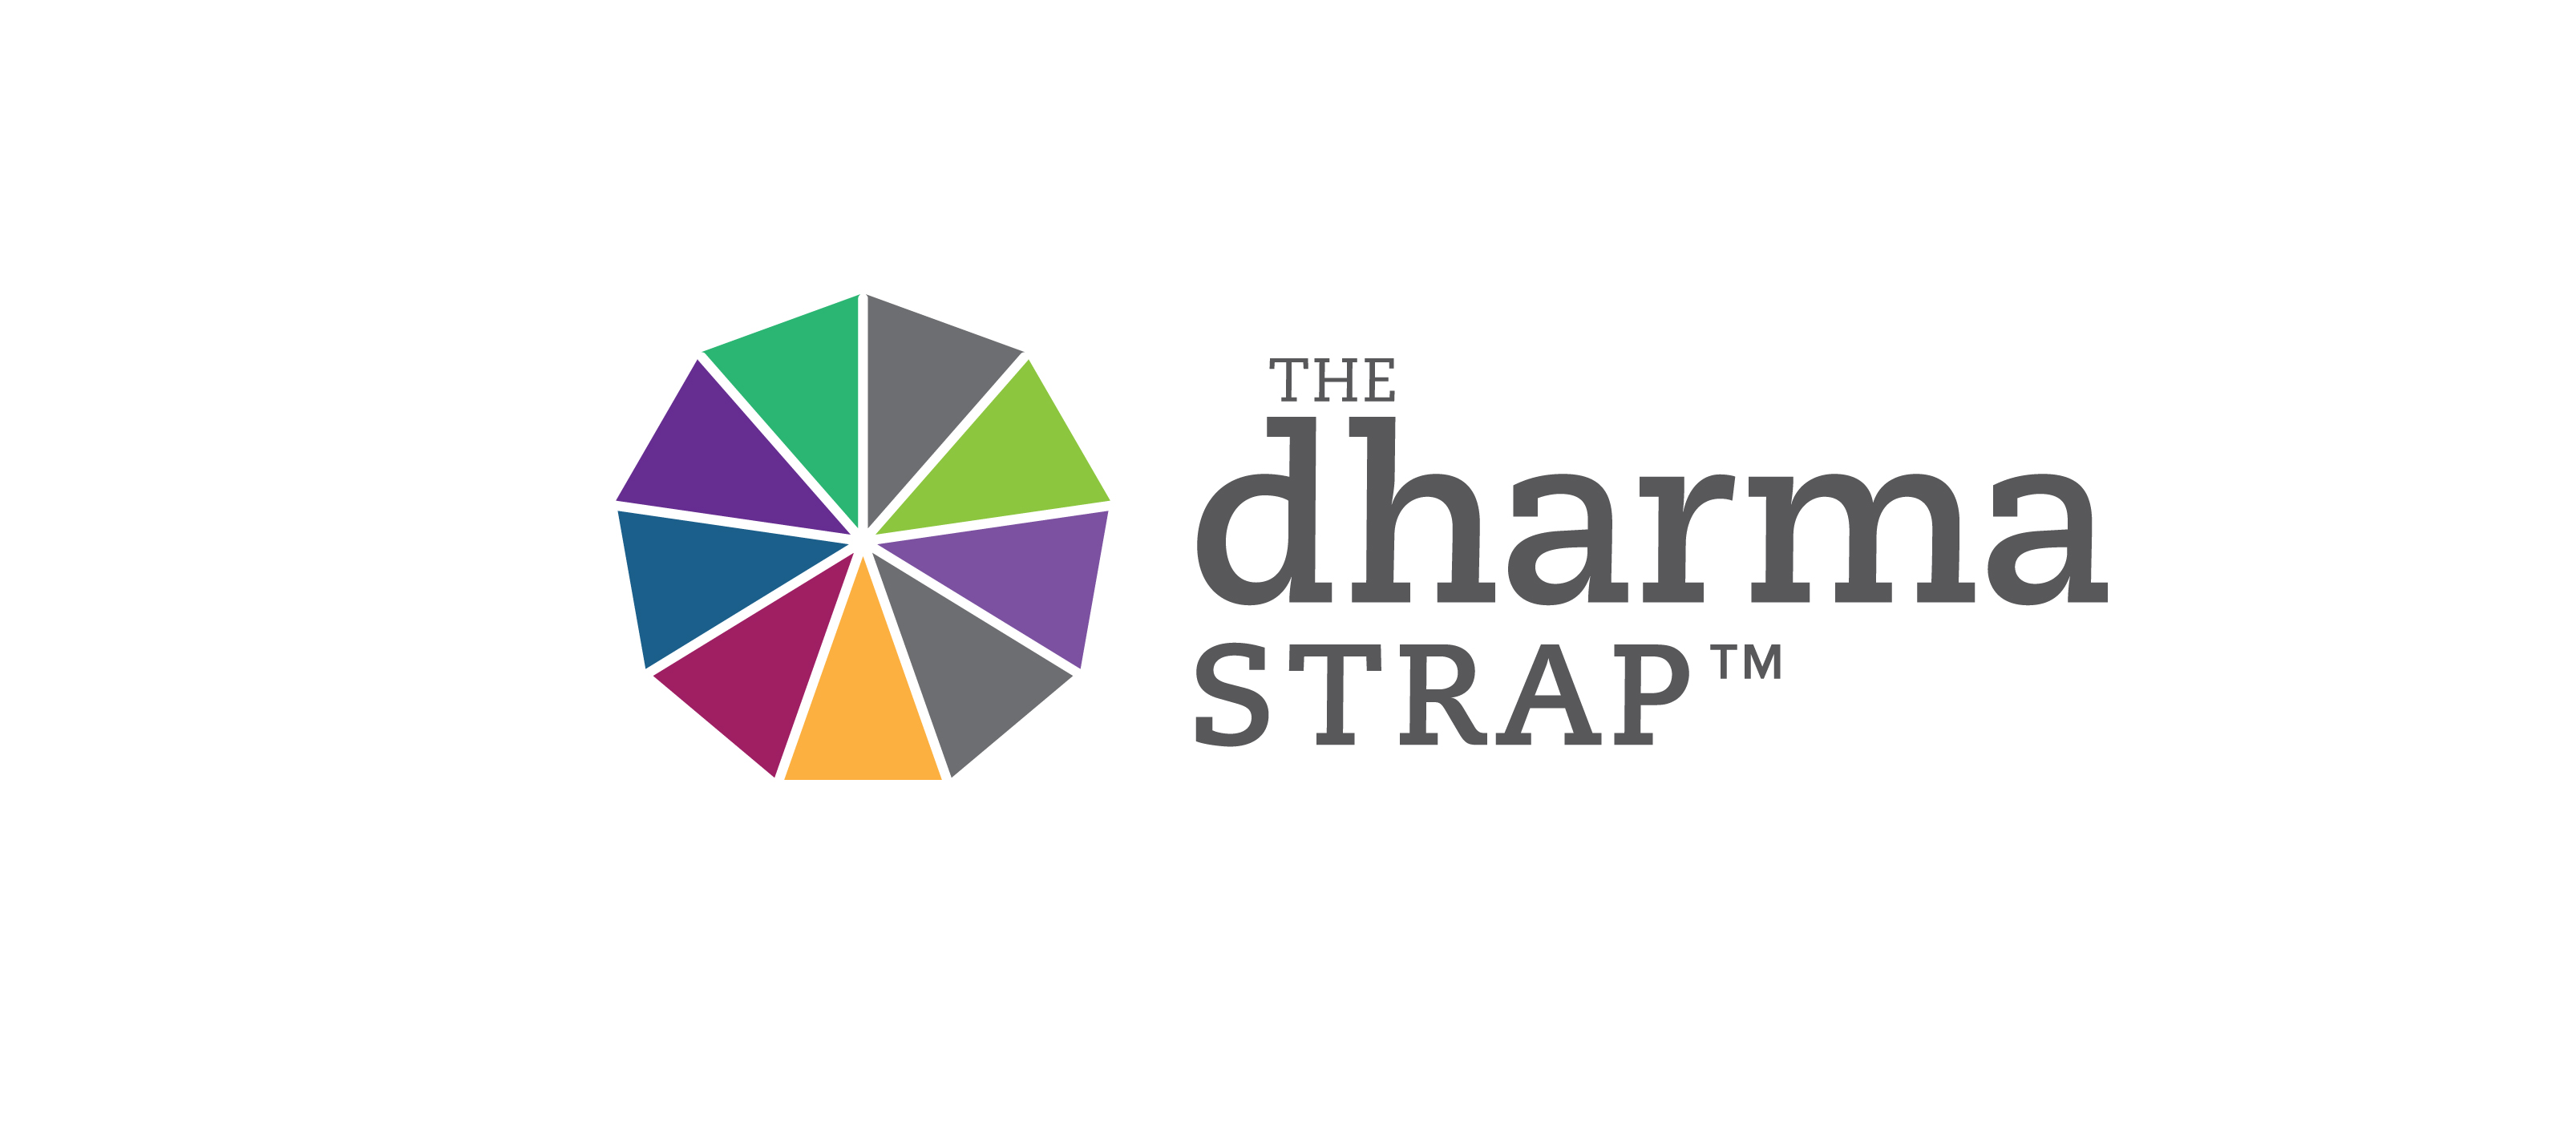 The Dharma Strap™